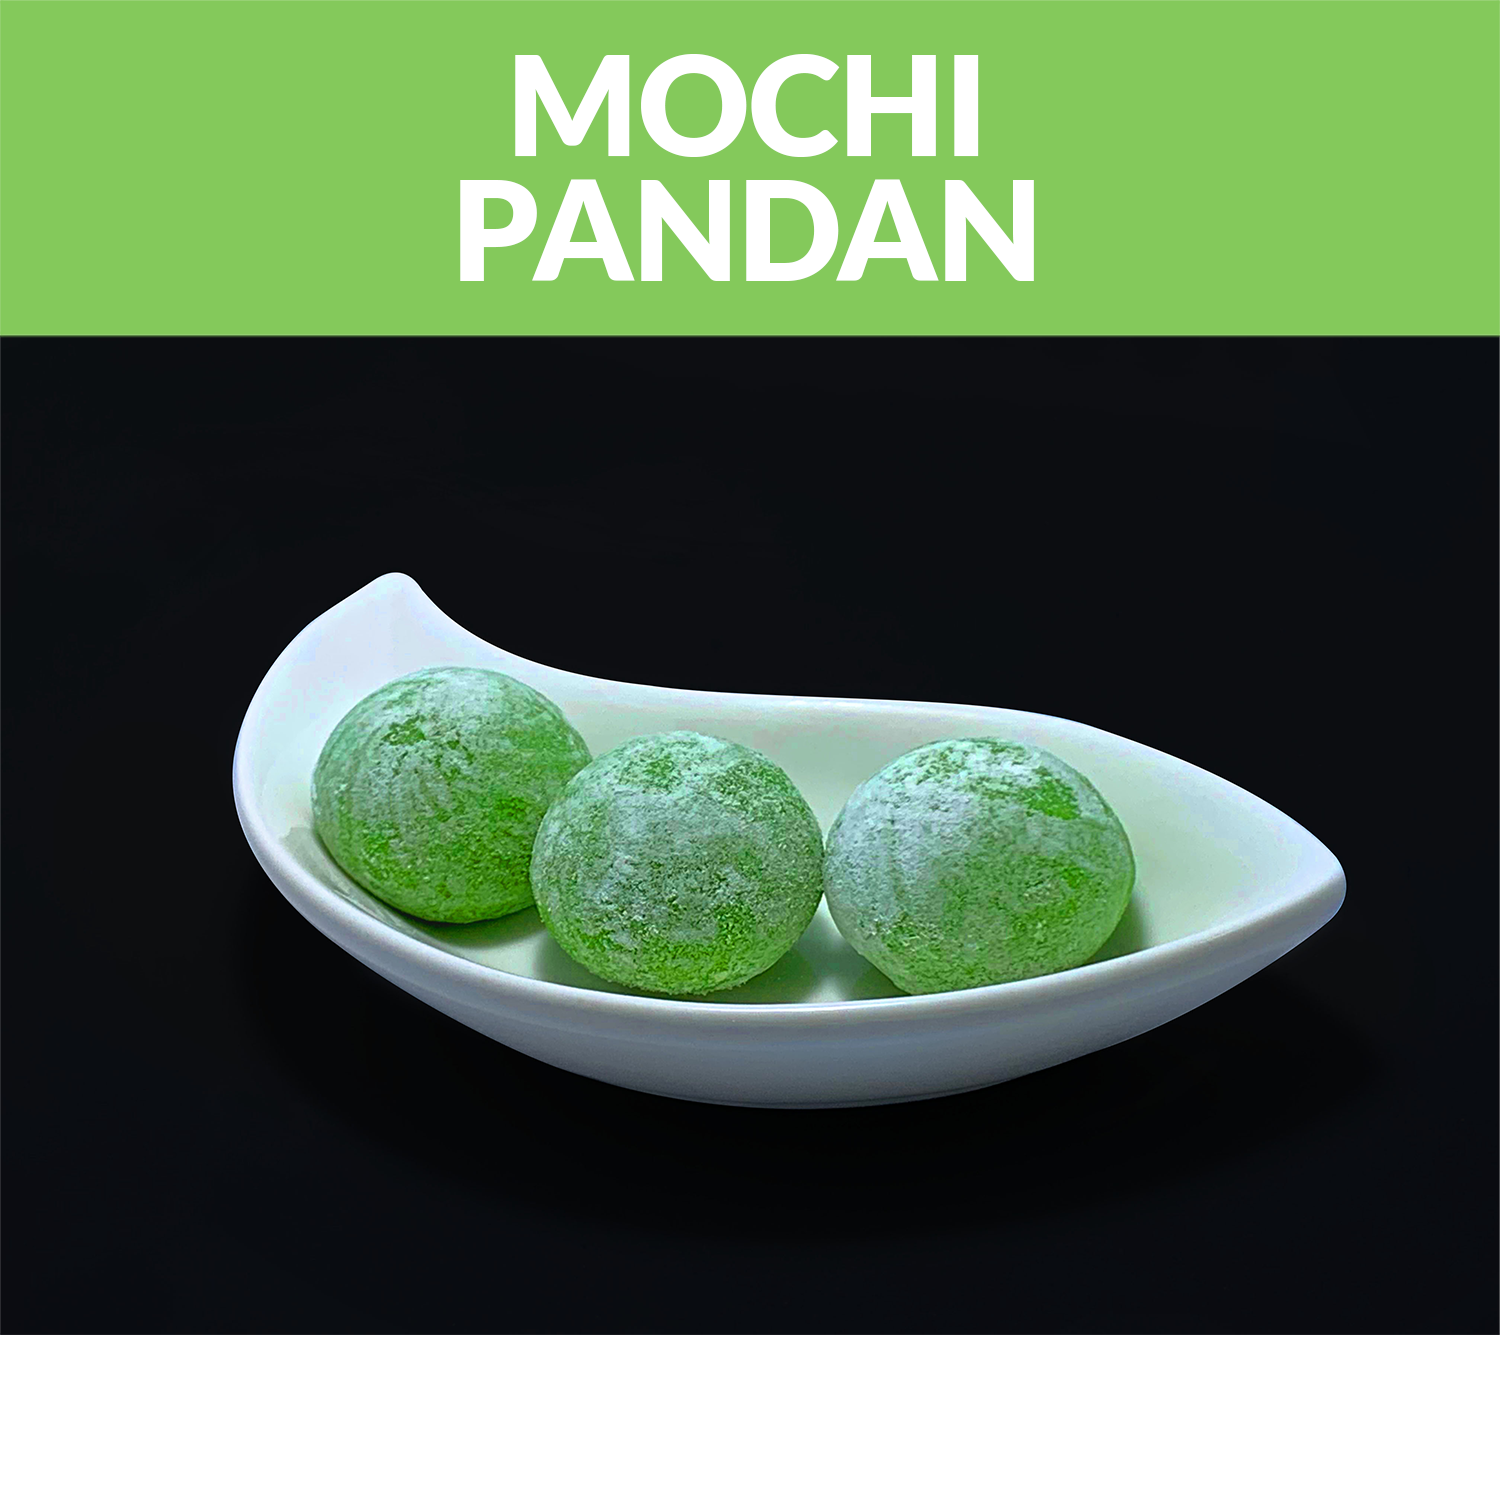 Products-Mochi-Mochi-Pandan.png